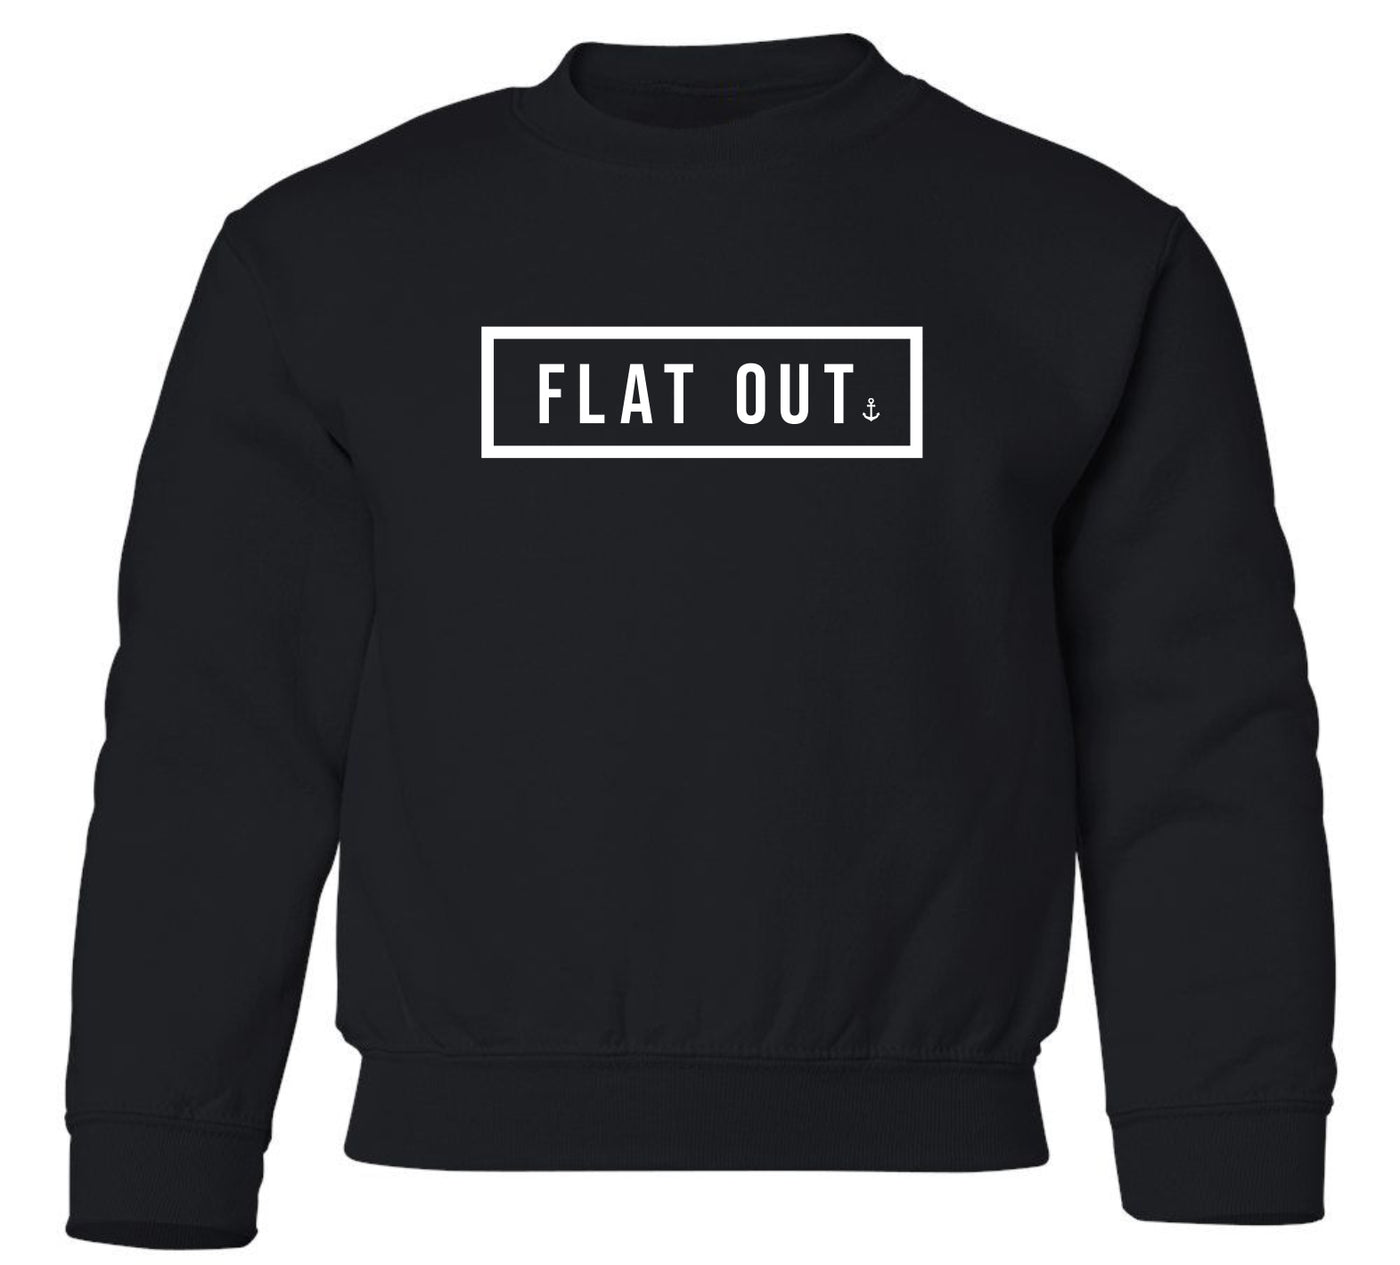 "Flat Out" Toddler/Youth Crewneck Sweatshirt